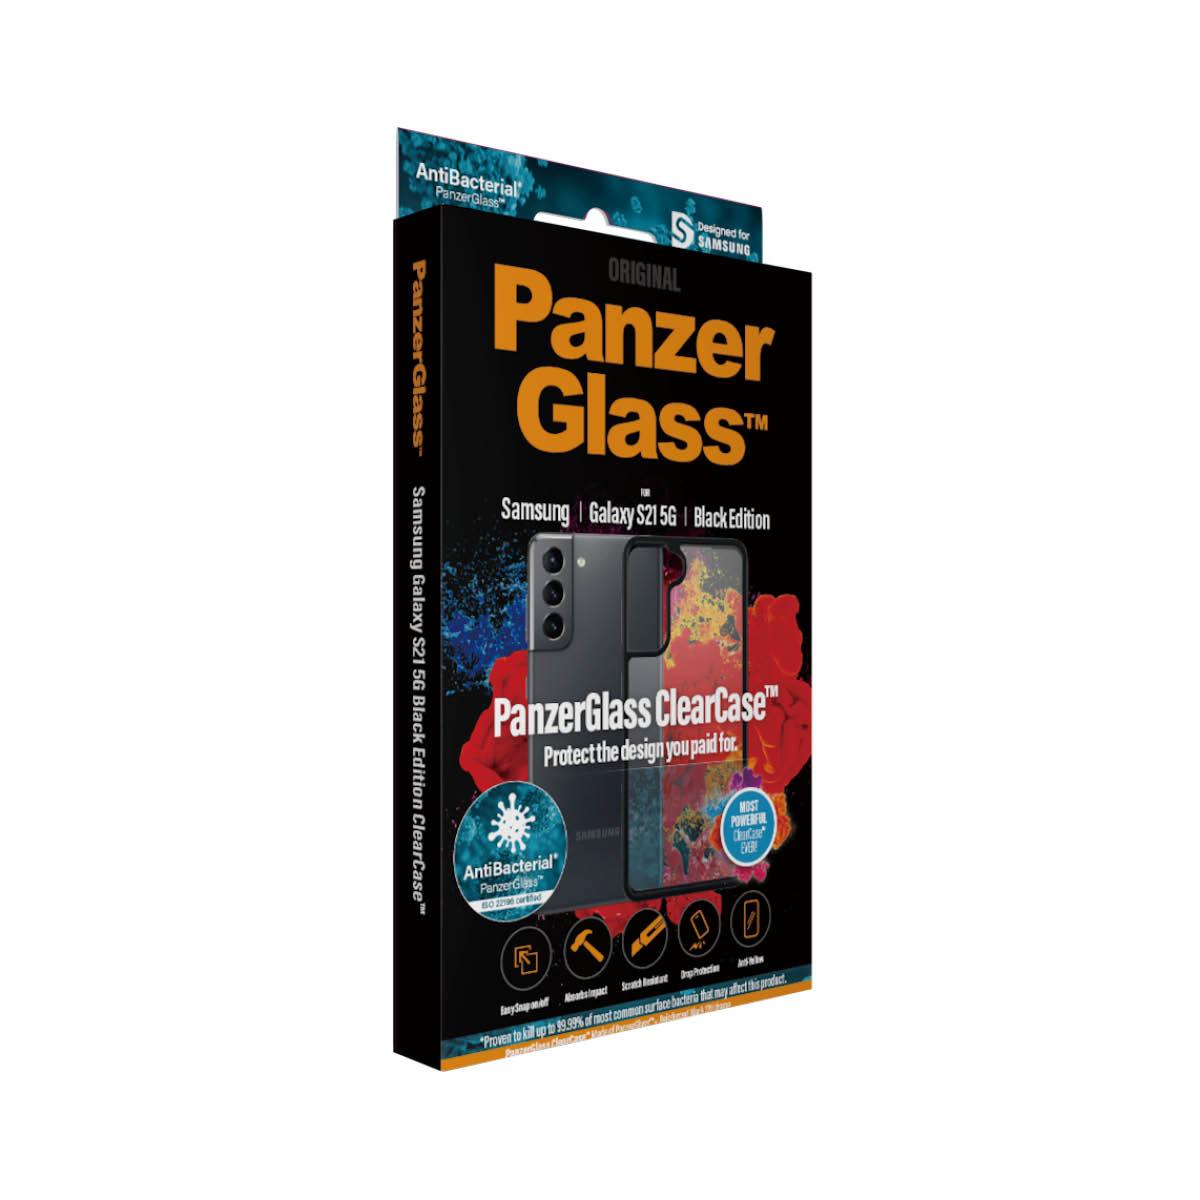 PanzerGlasstm ClearCasetm Samsung Galaxy S21 5G thumb